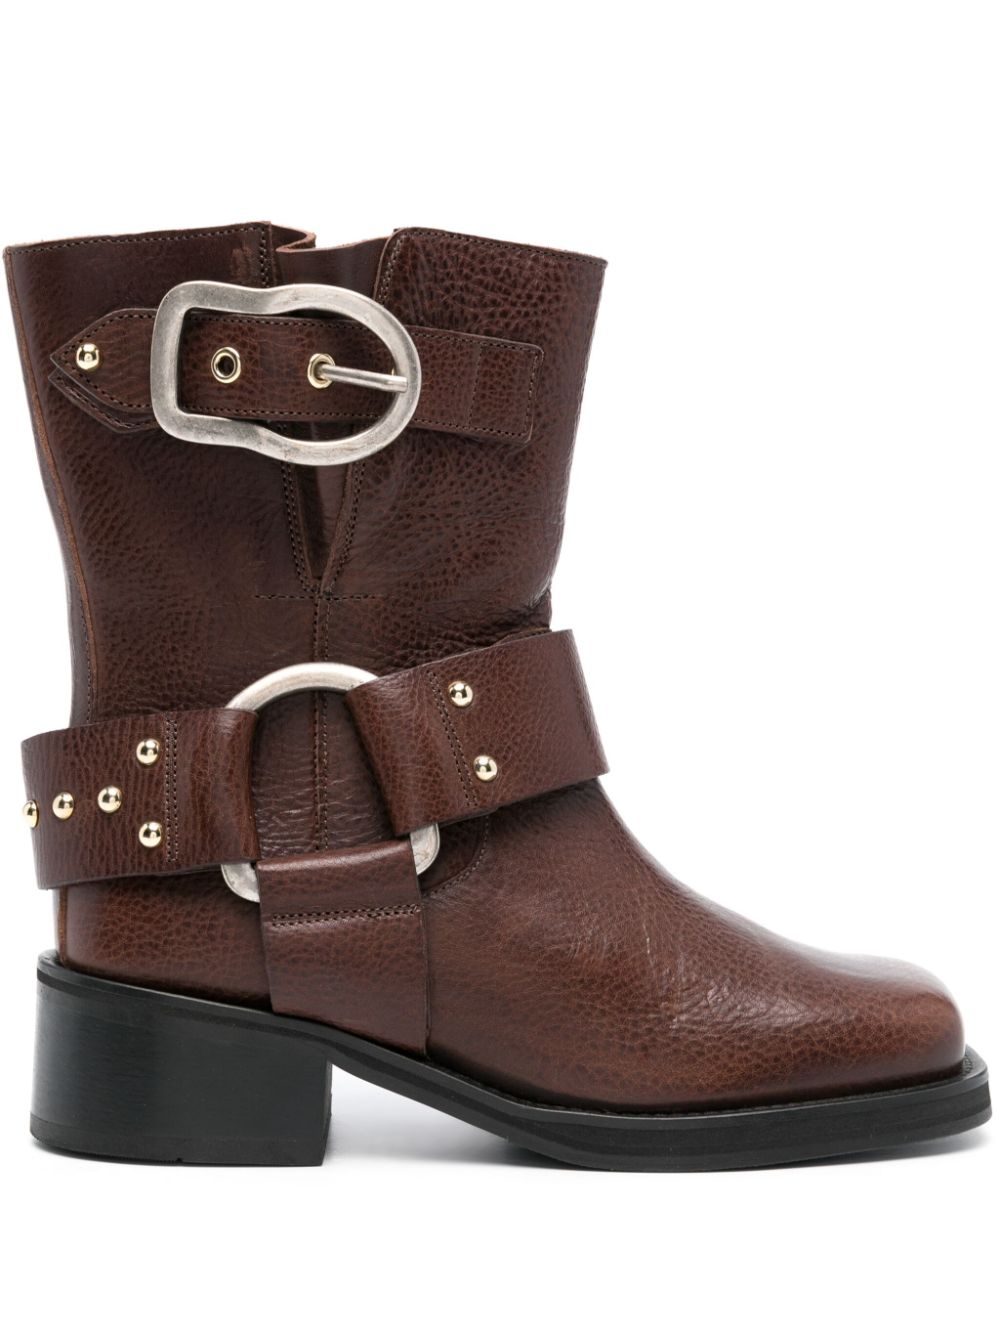 stud-embellished leather boots